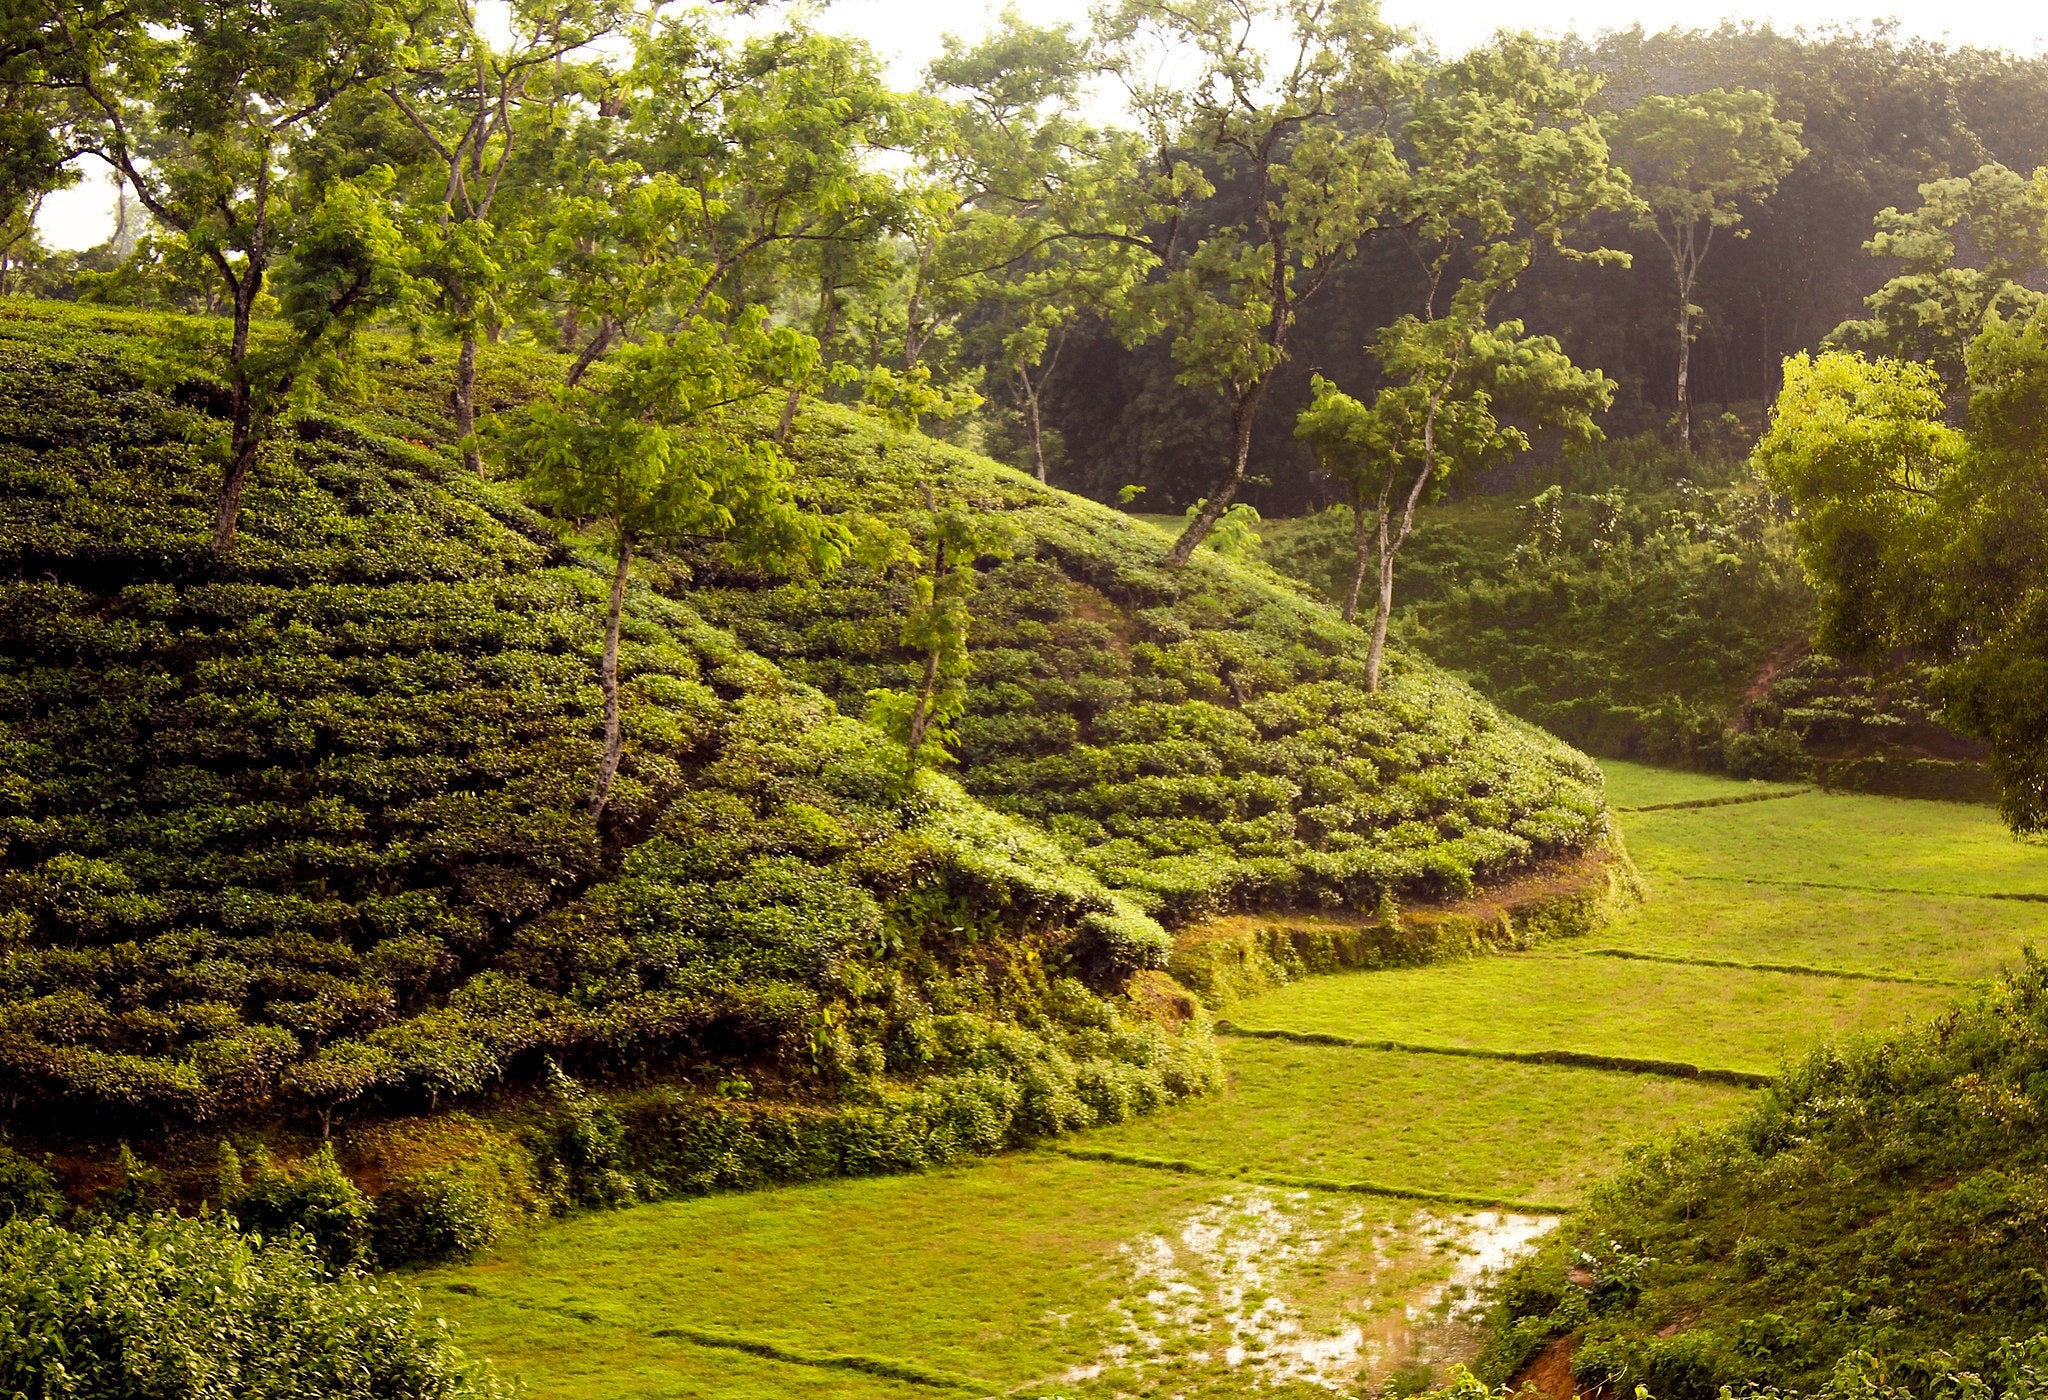 Tea culture in Bangladesh